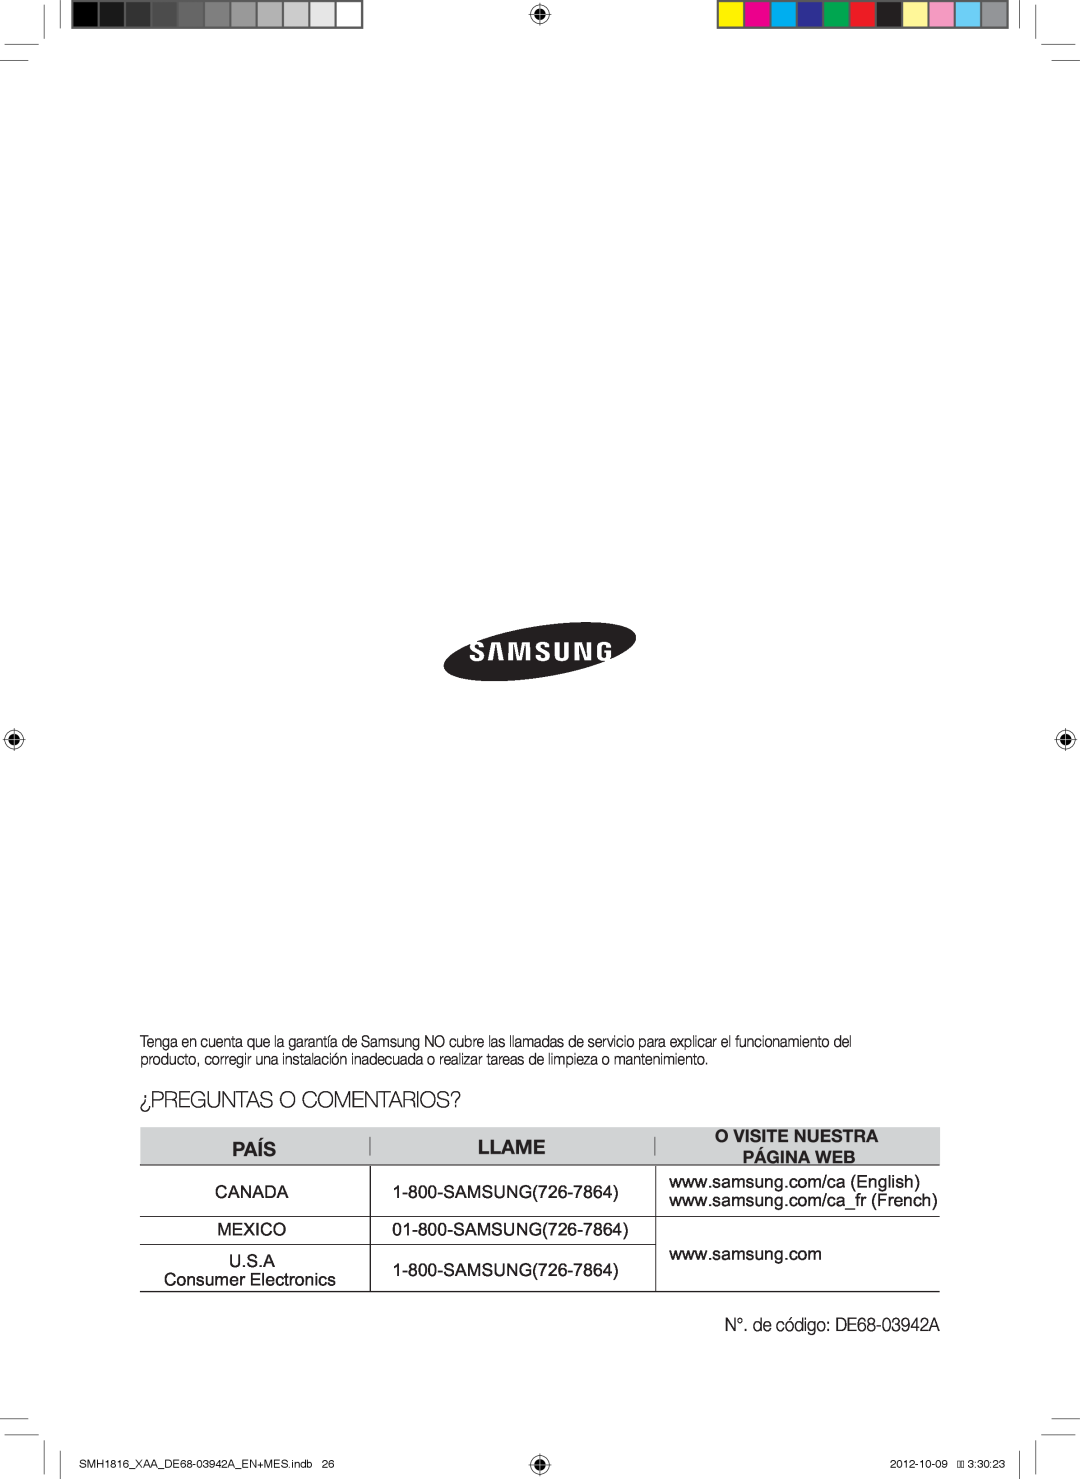 Samsung SMH1816B, SMH1816S, SMH1816W Canada, SAMSUNG726-7864, Mexico, U.S.A, SMH1816XAADE68-03942AEN+MES.indb, 2012-10-09 